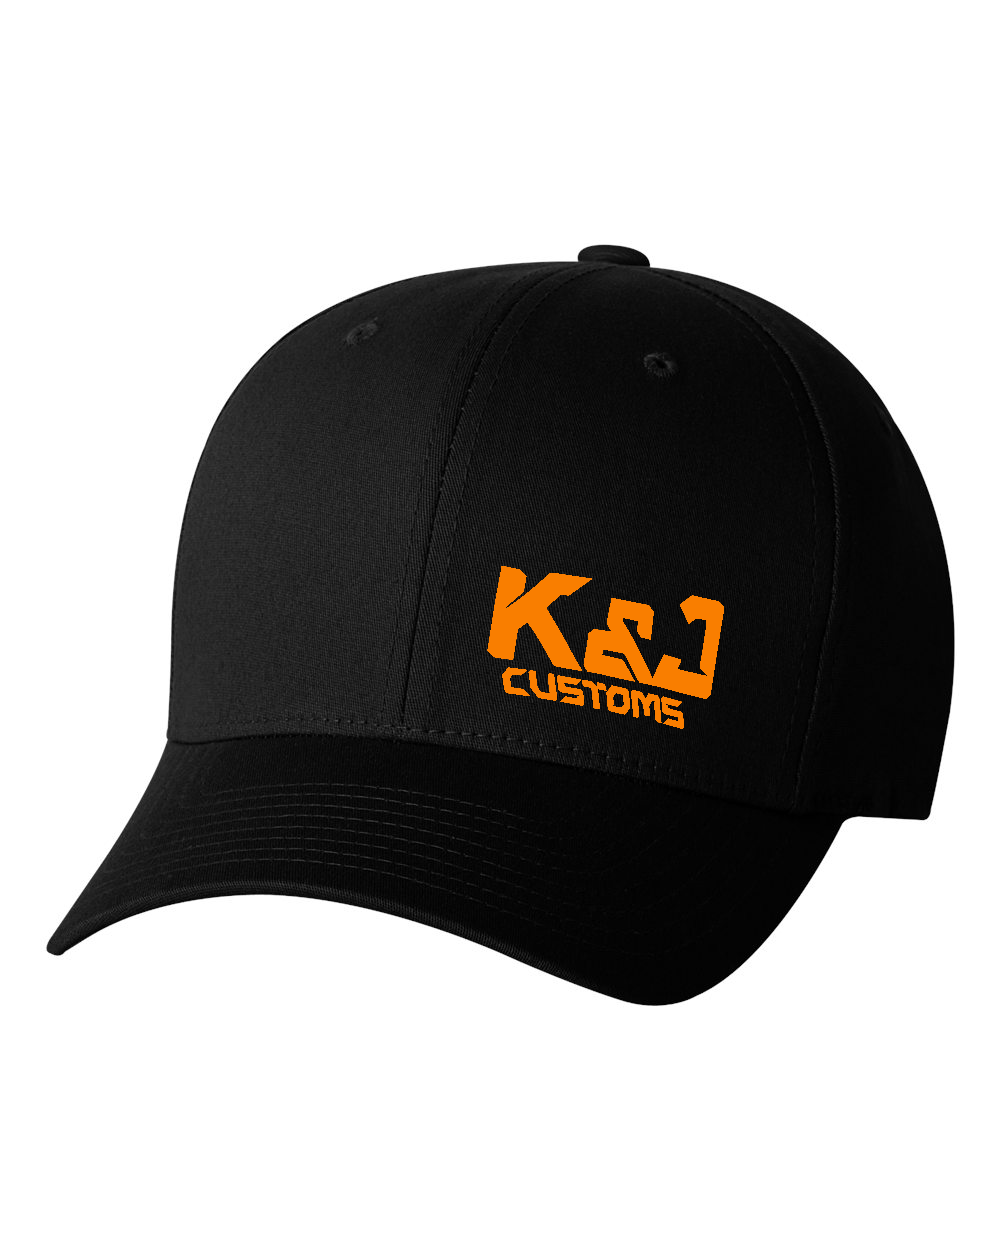 K&J Customs Hats Black Acid Apparel